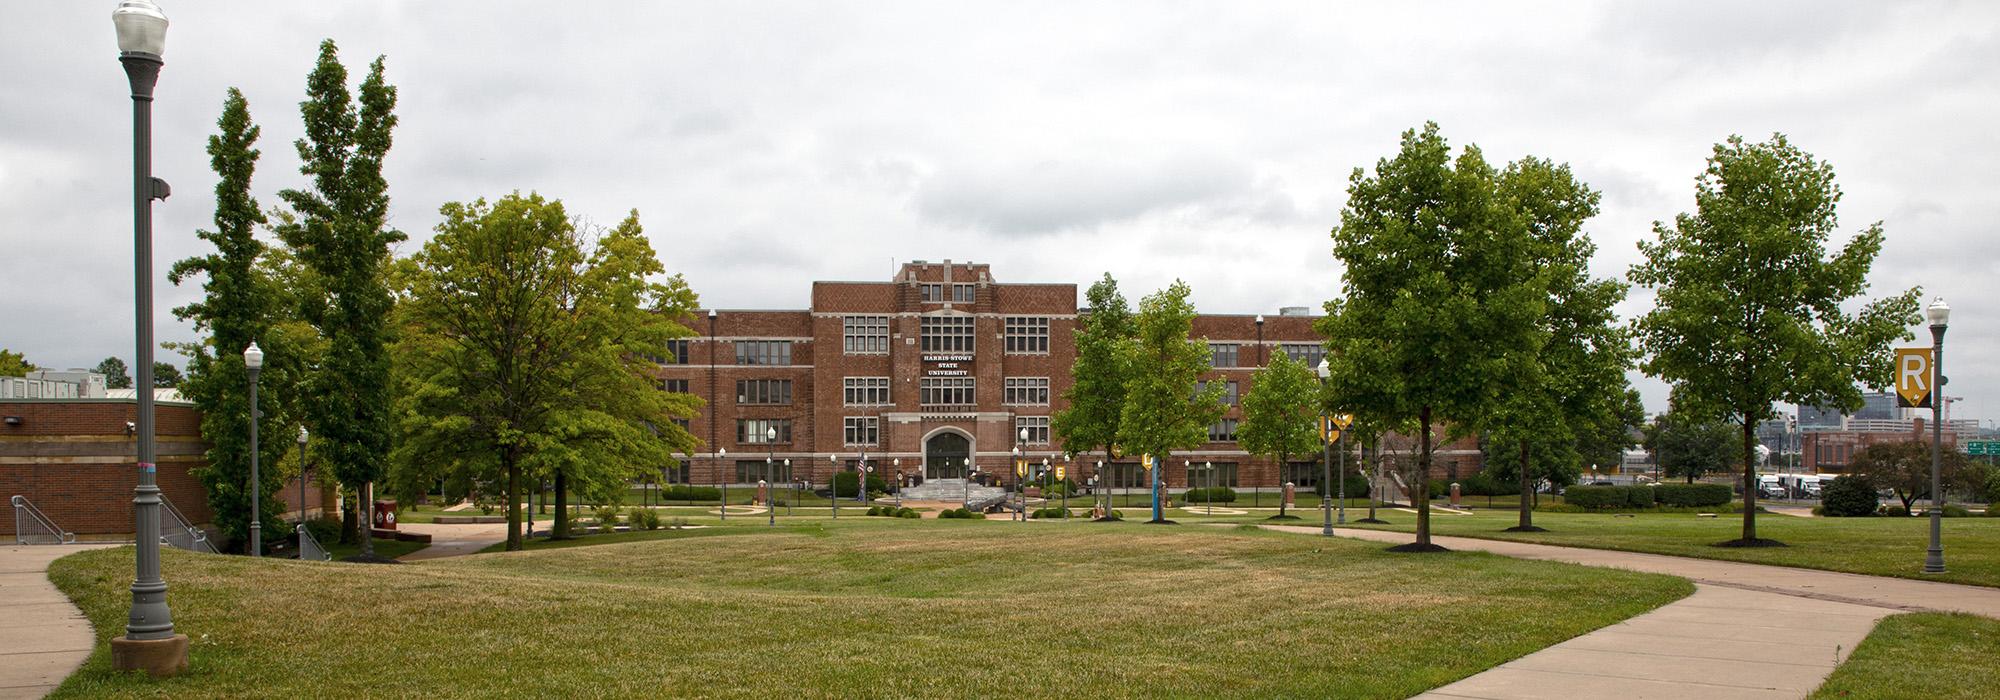 Harris Stowe State University, St. Louis, MO